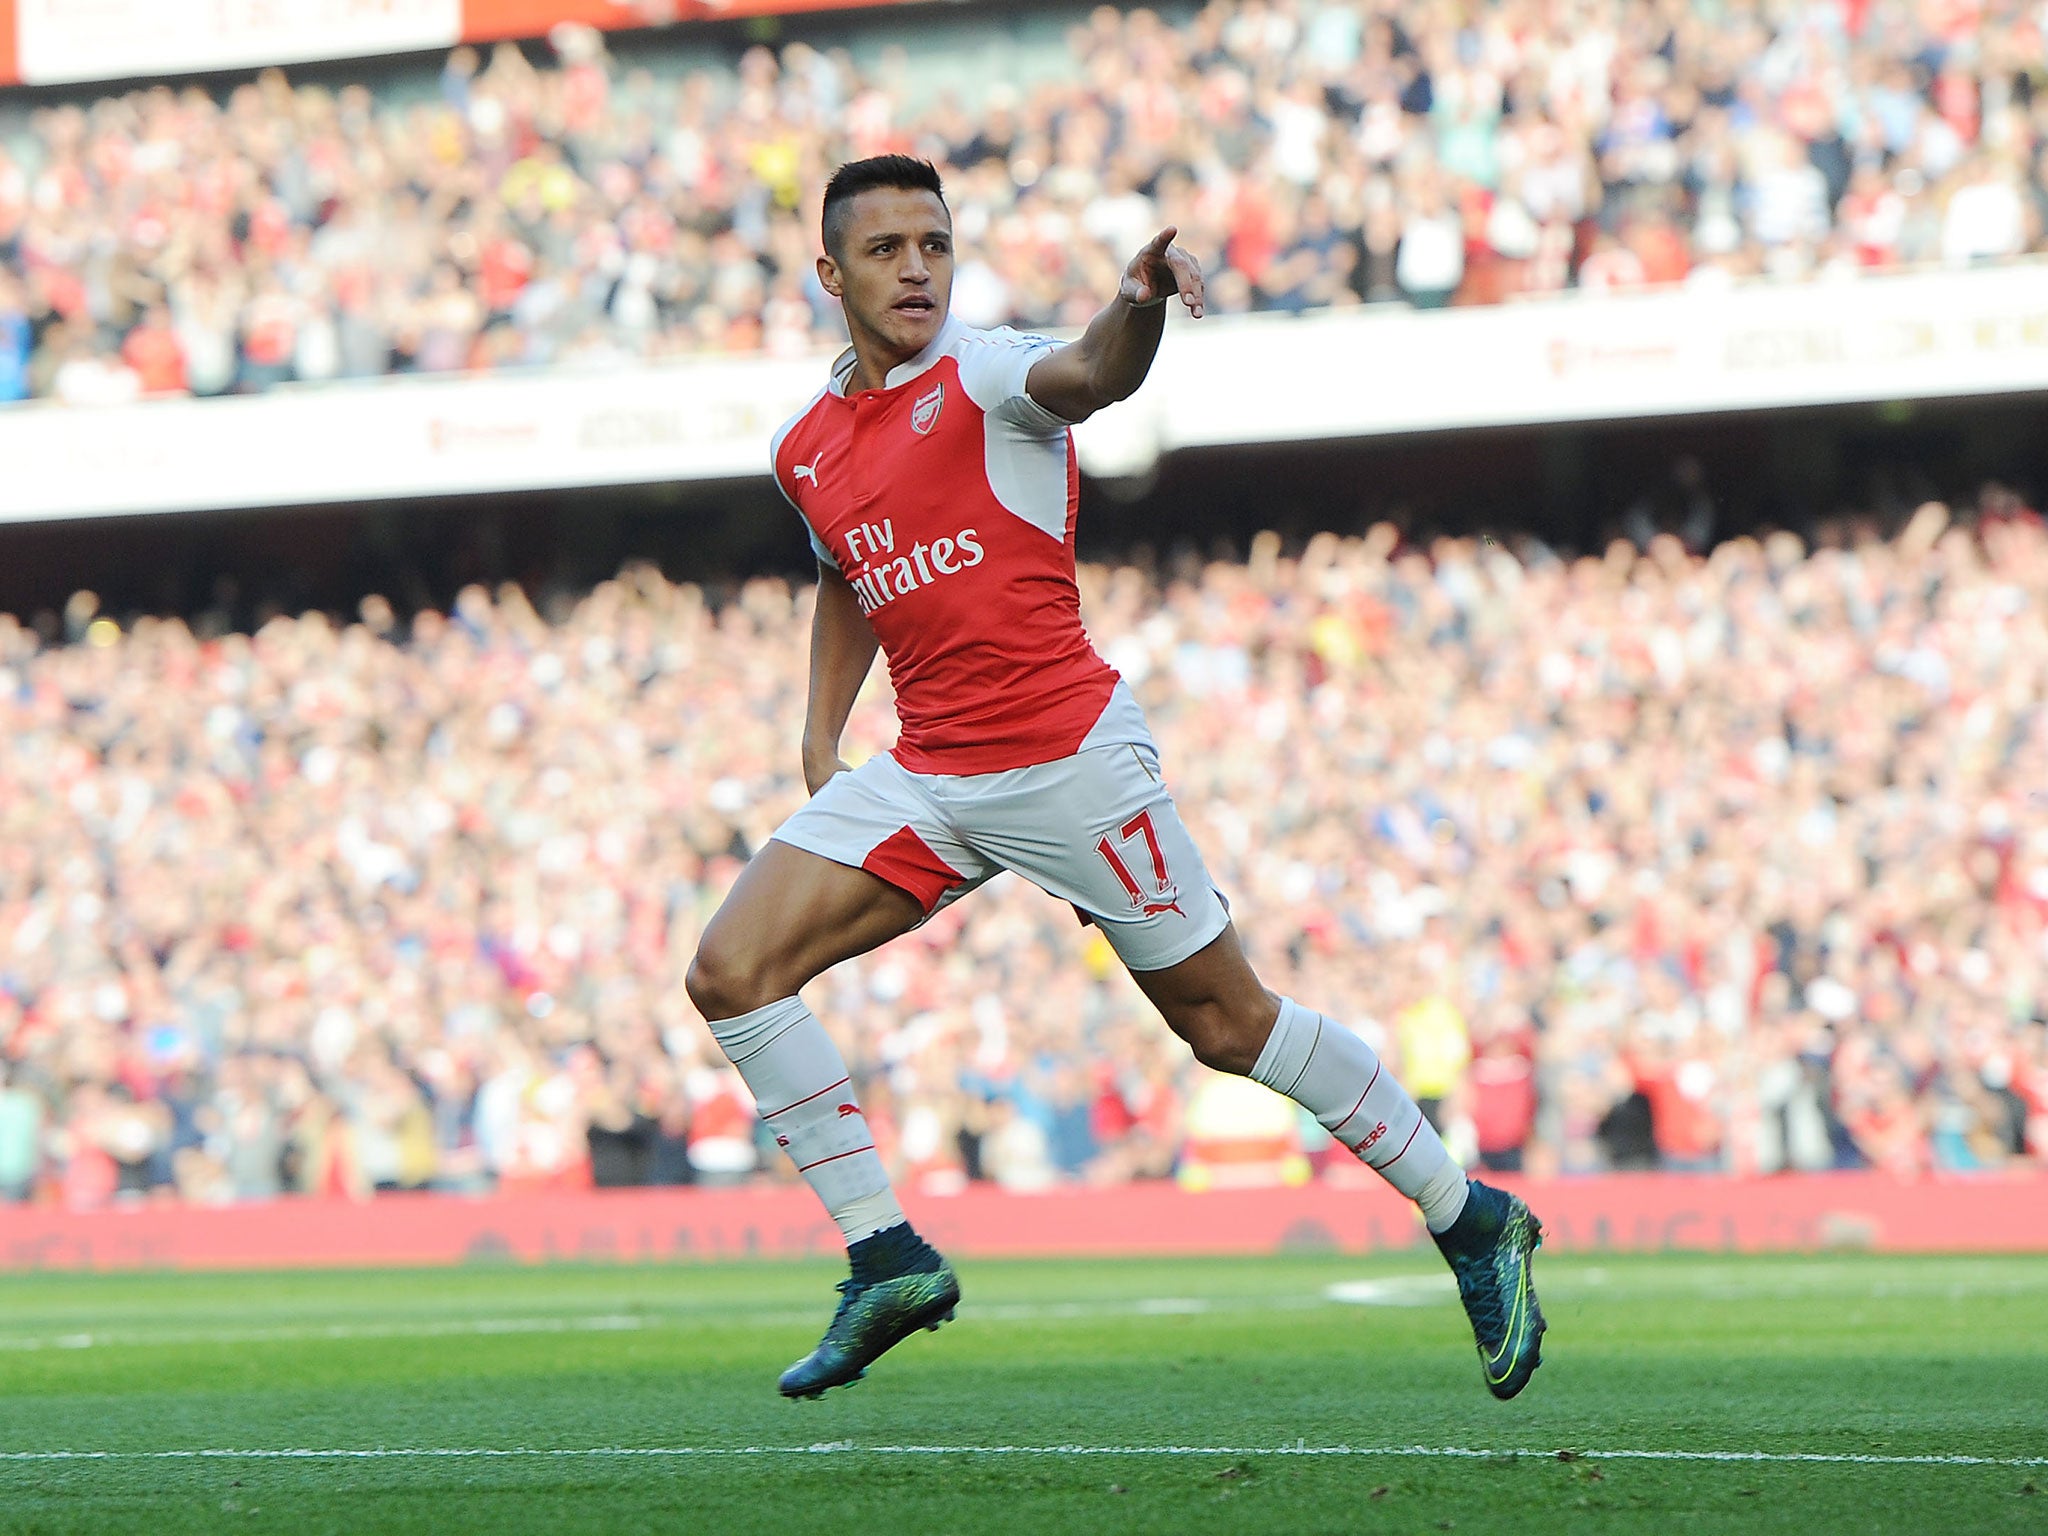 Arsenal forward Alexis Sanchez